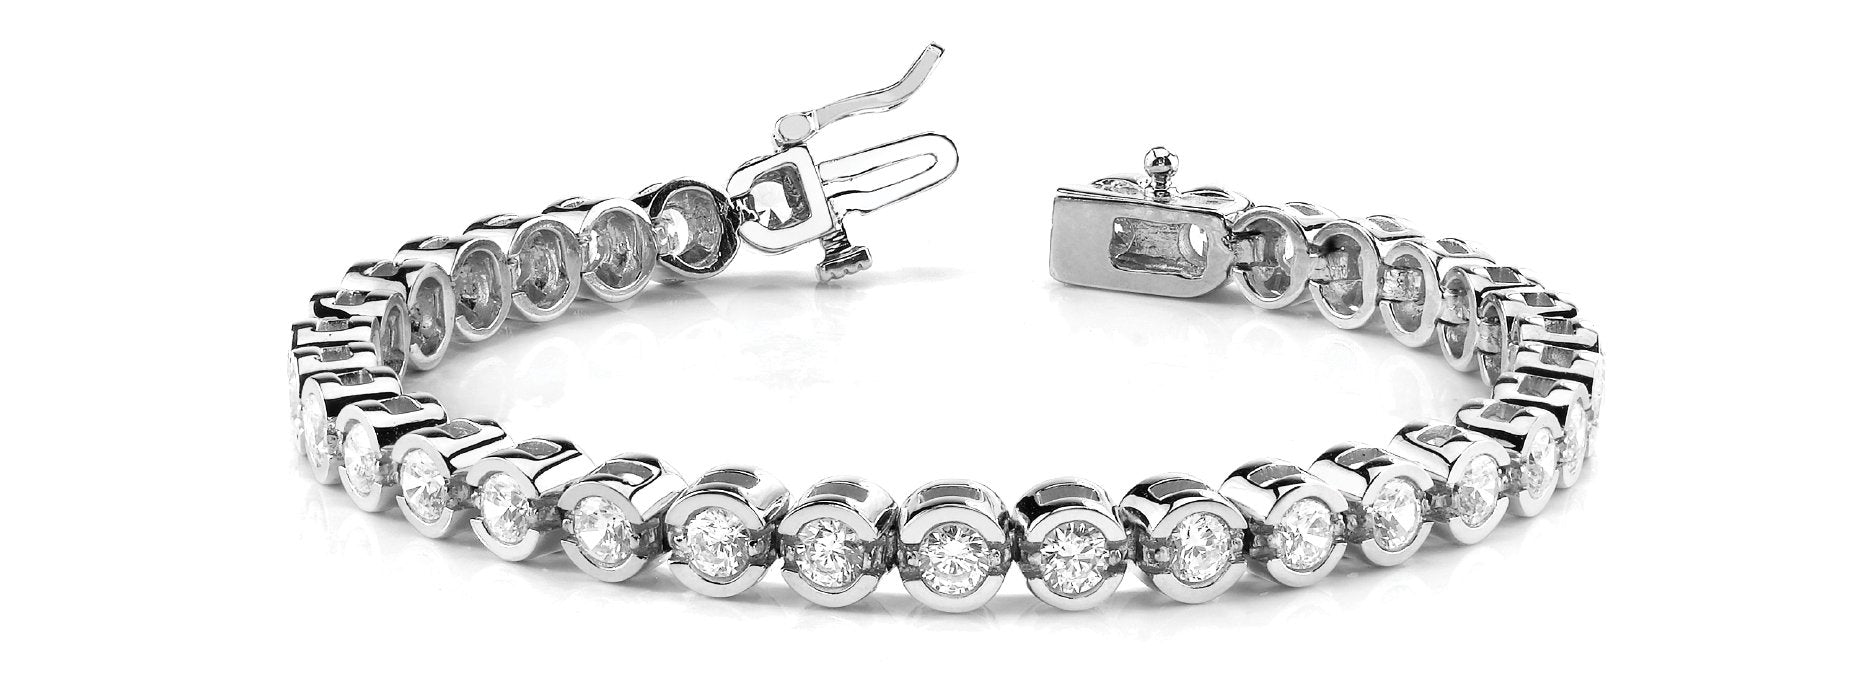 Fancy Diamond Bracelet Ladies 5.89ct tw - 14kt White Gold